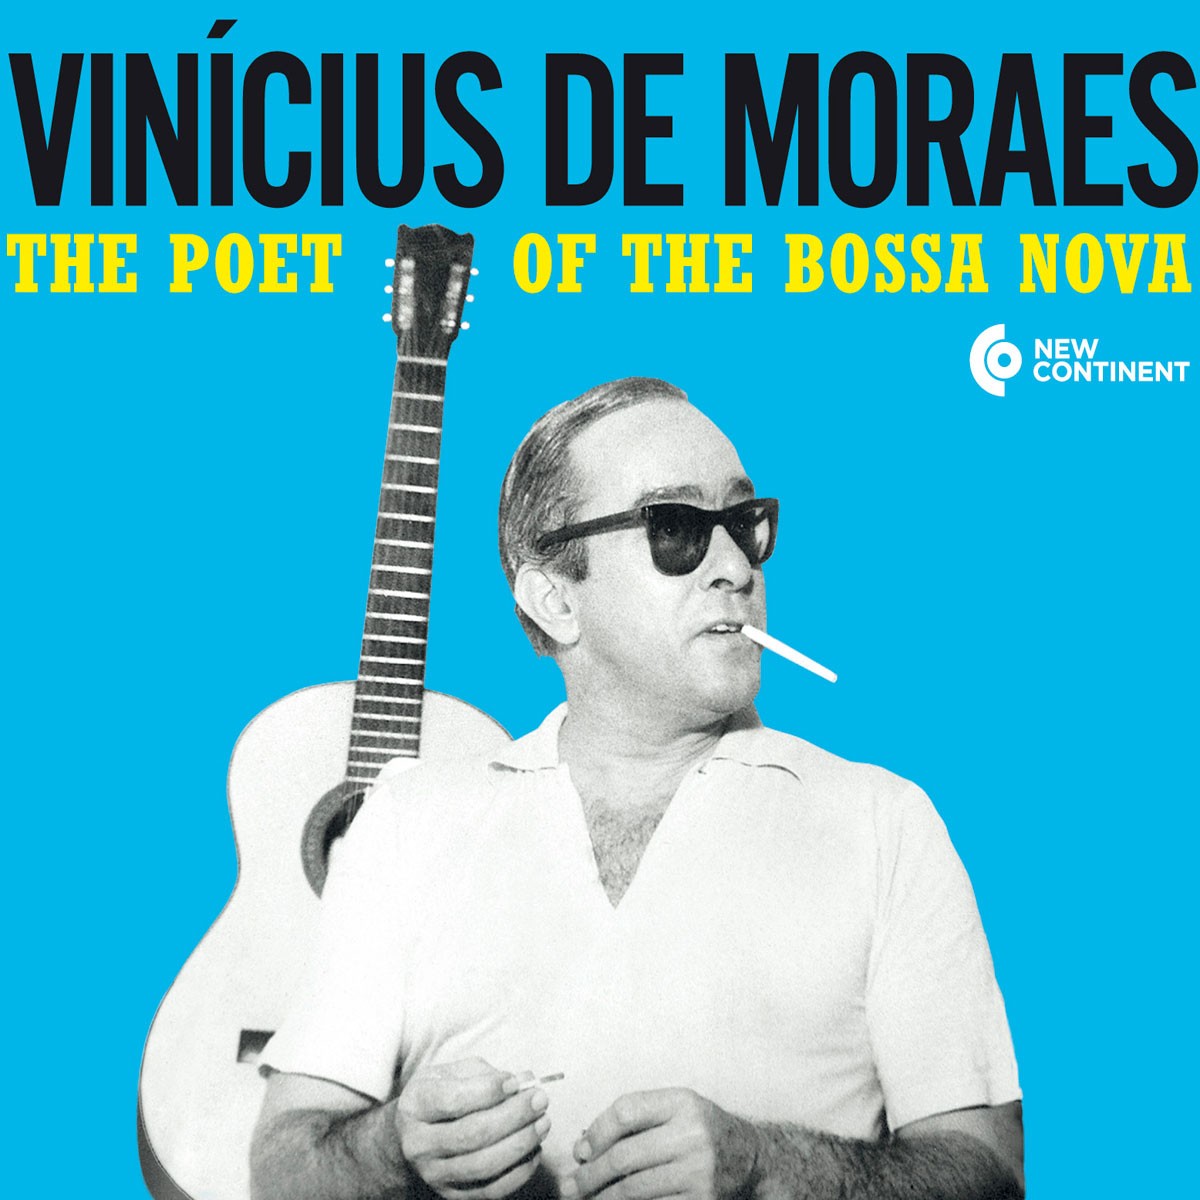 The poet of bossa nova